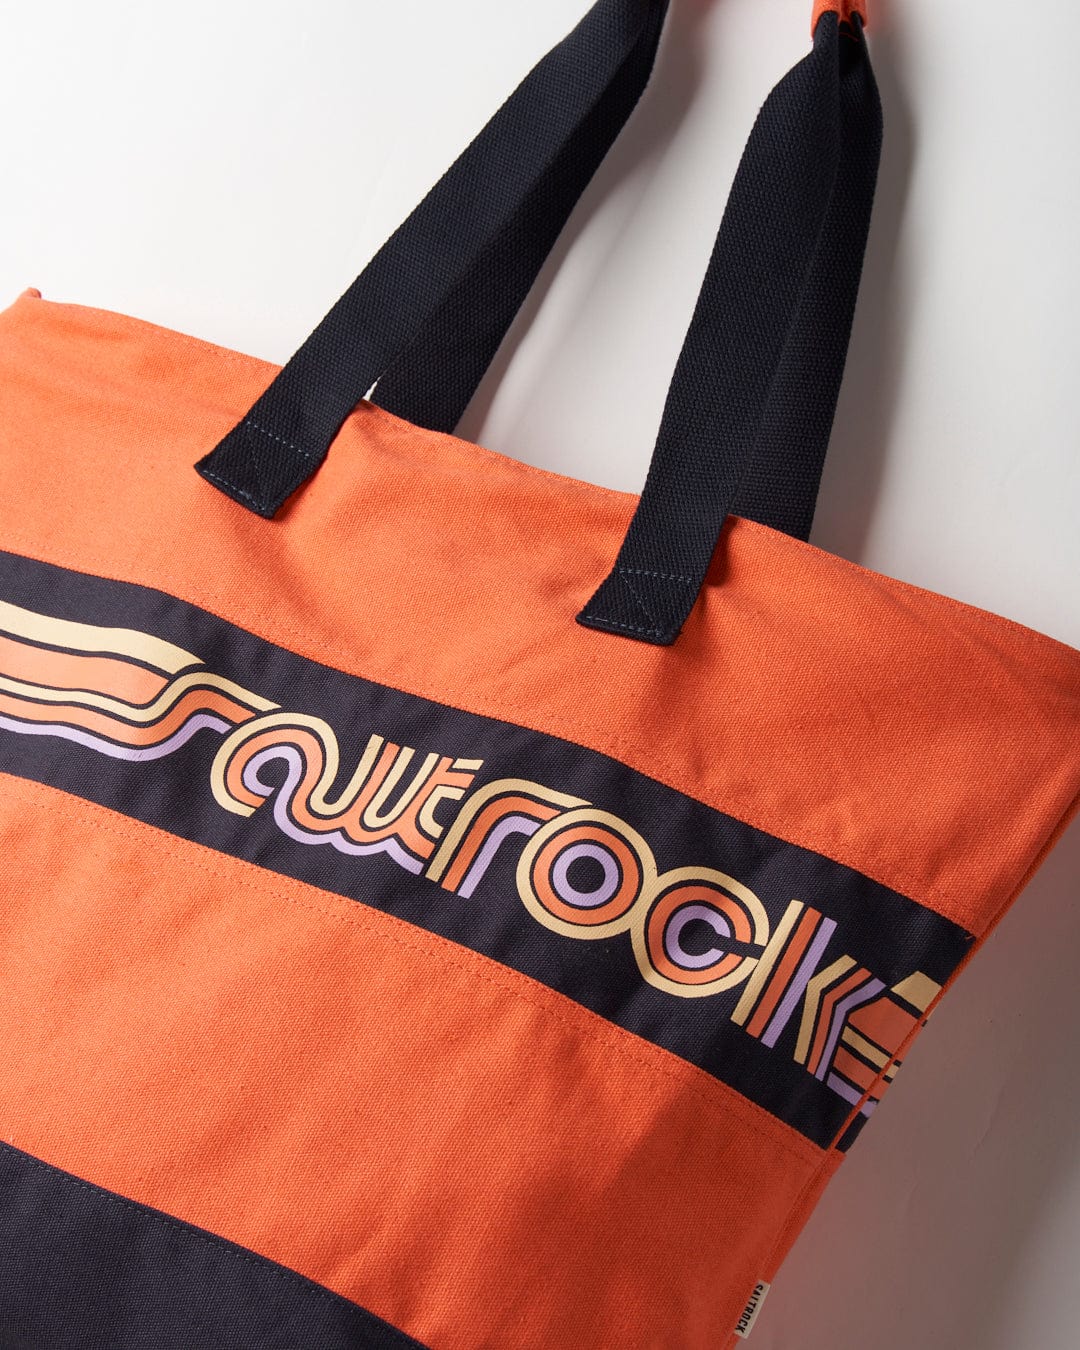 Cora Retro Beach Bag - Coral tote bag with a durable retro wave design and the text "souvenir".